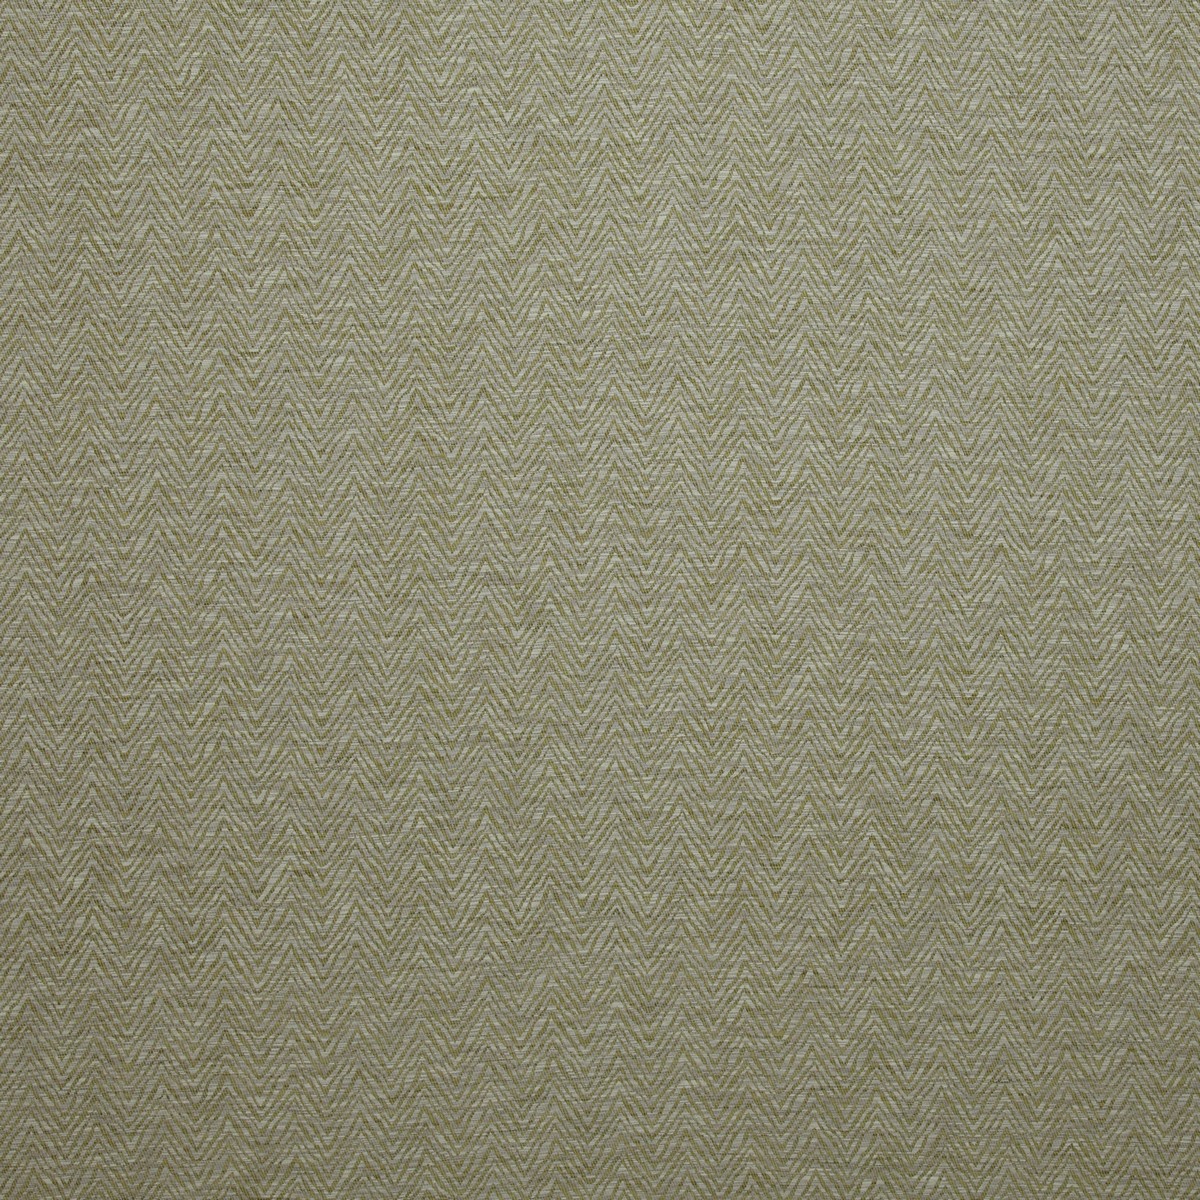 Nagoa Olive Fabric by iLiv